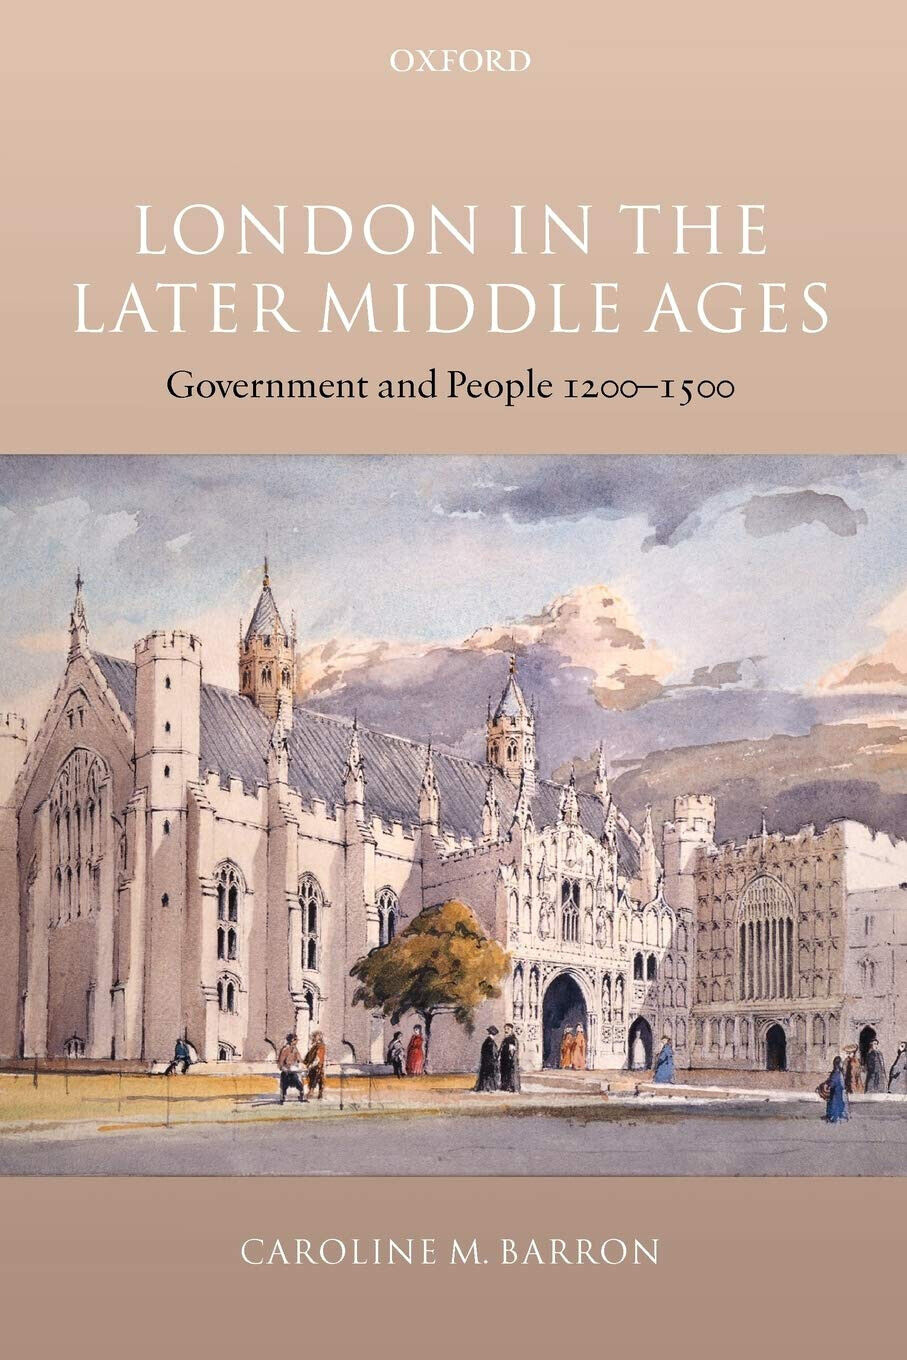 London in the Later Middle Ages - Caroline M. Barron - Oxford, 2005 libro usato